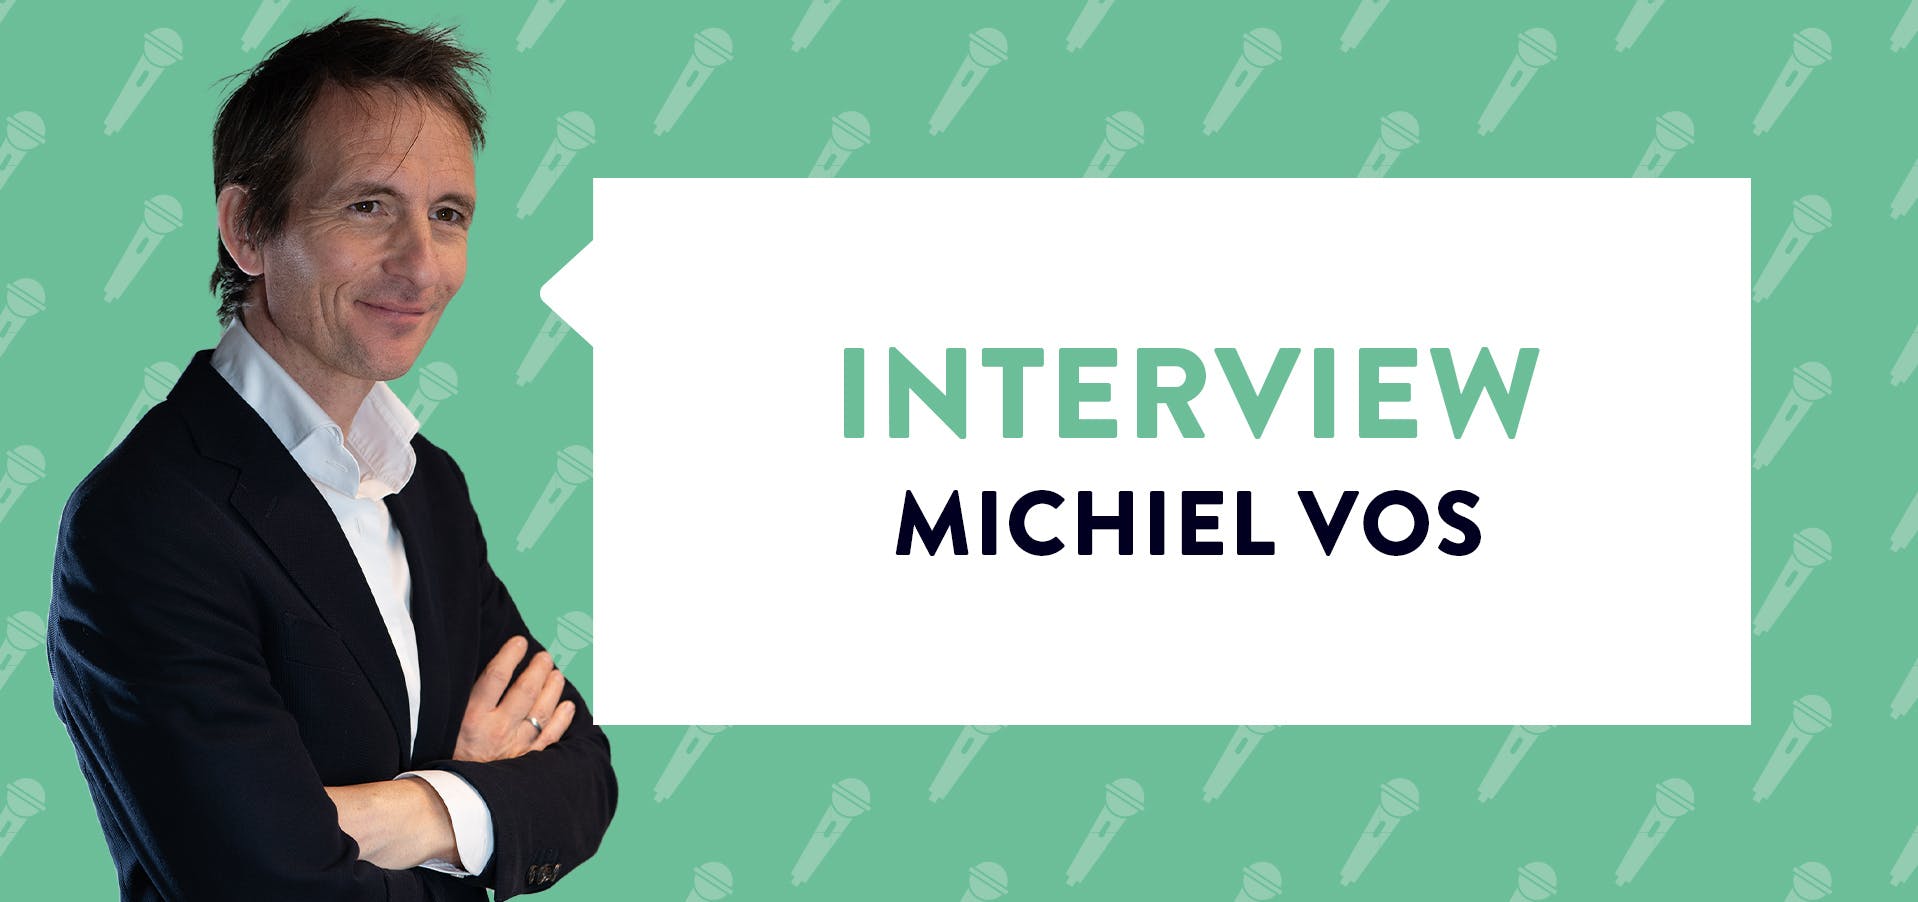 Michiel Vos met armen over elkaar glimlachend in zwart pak bij groene achtergrond met tekst 'interview michiel vos'